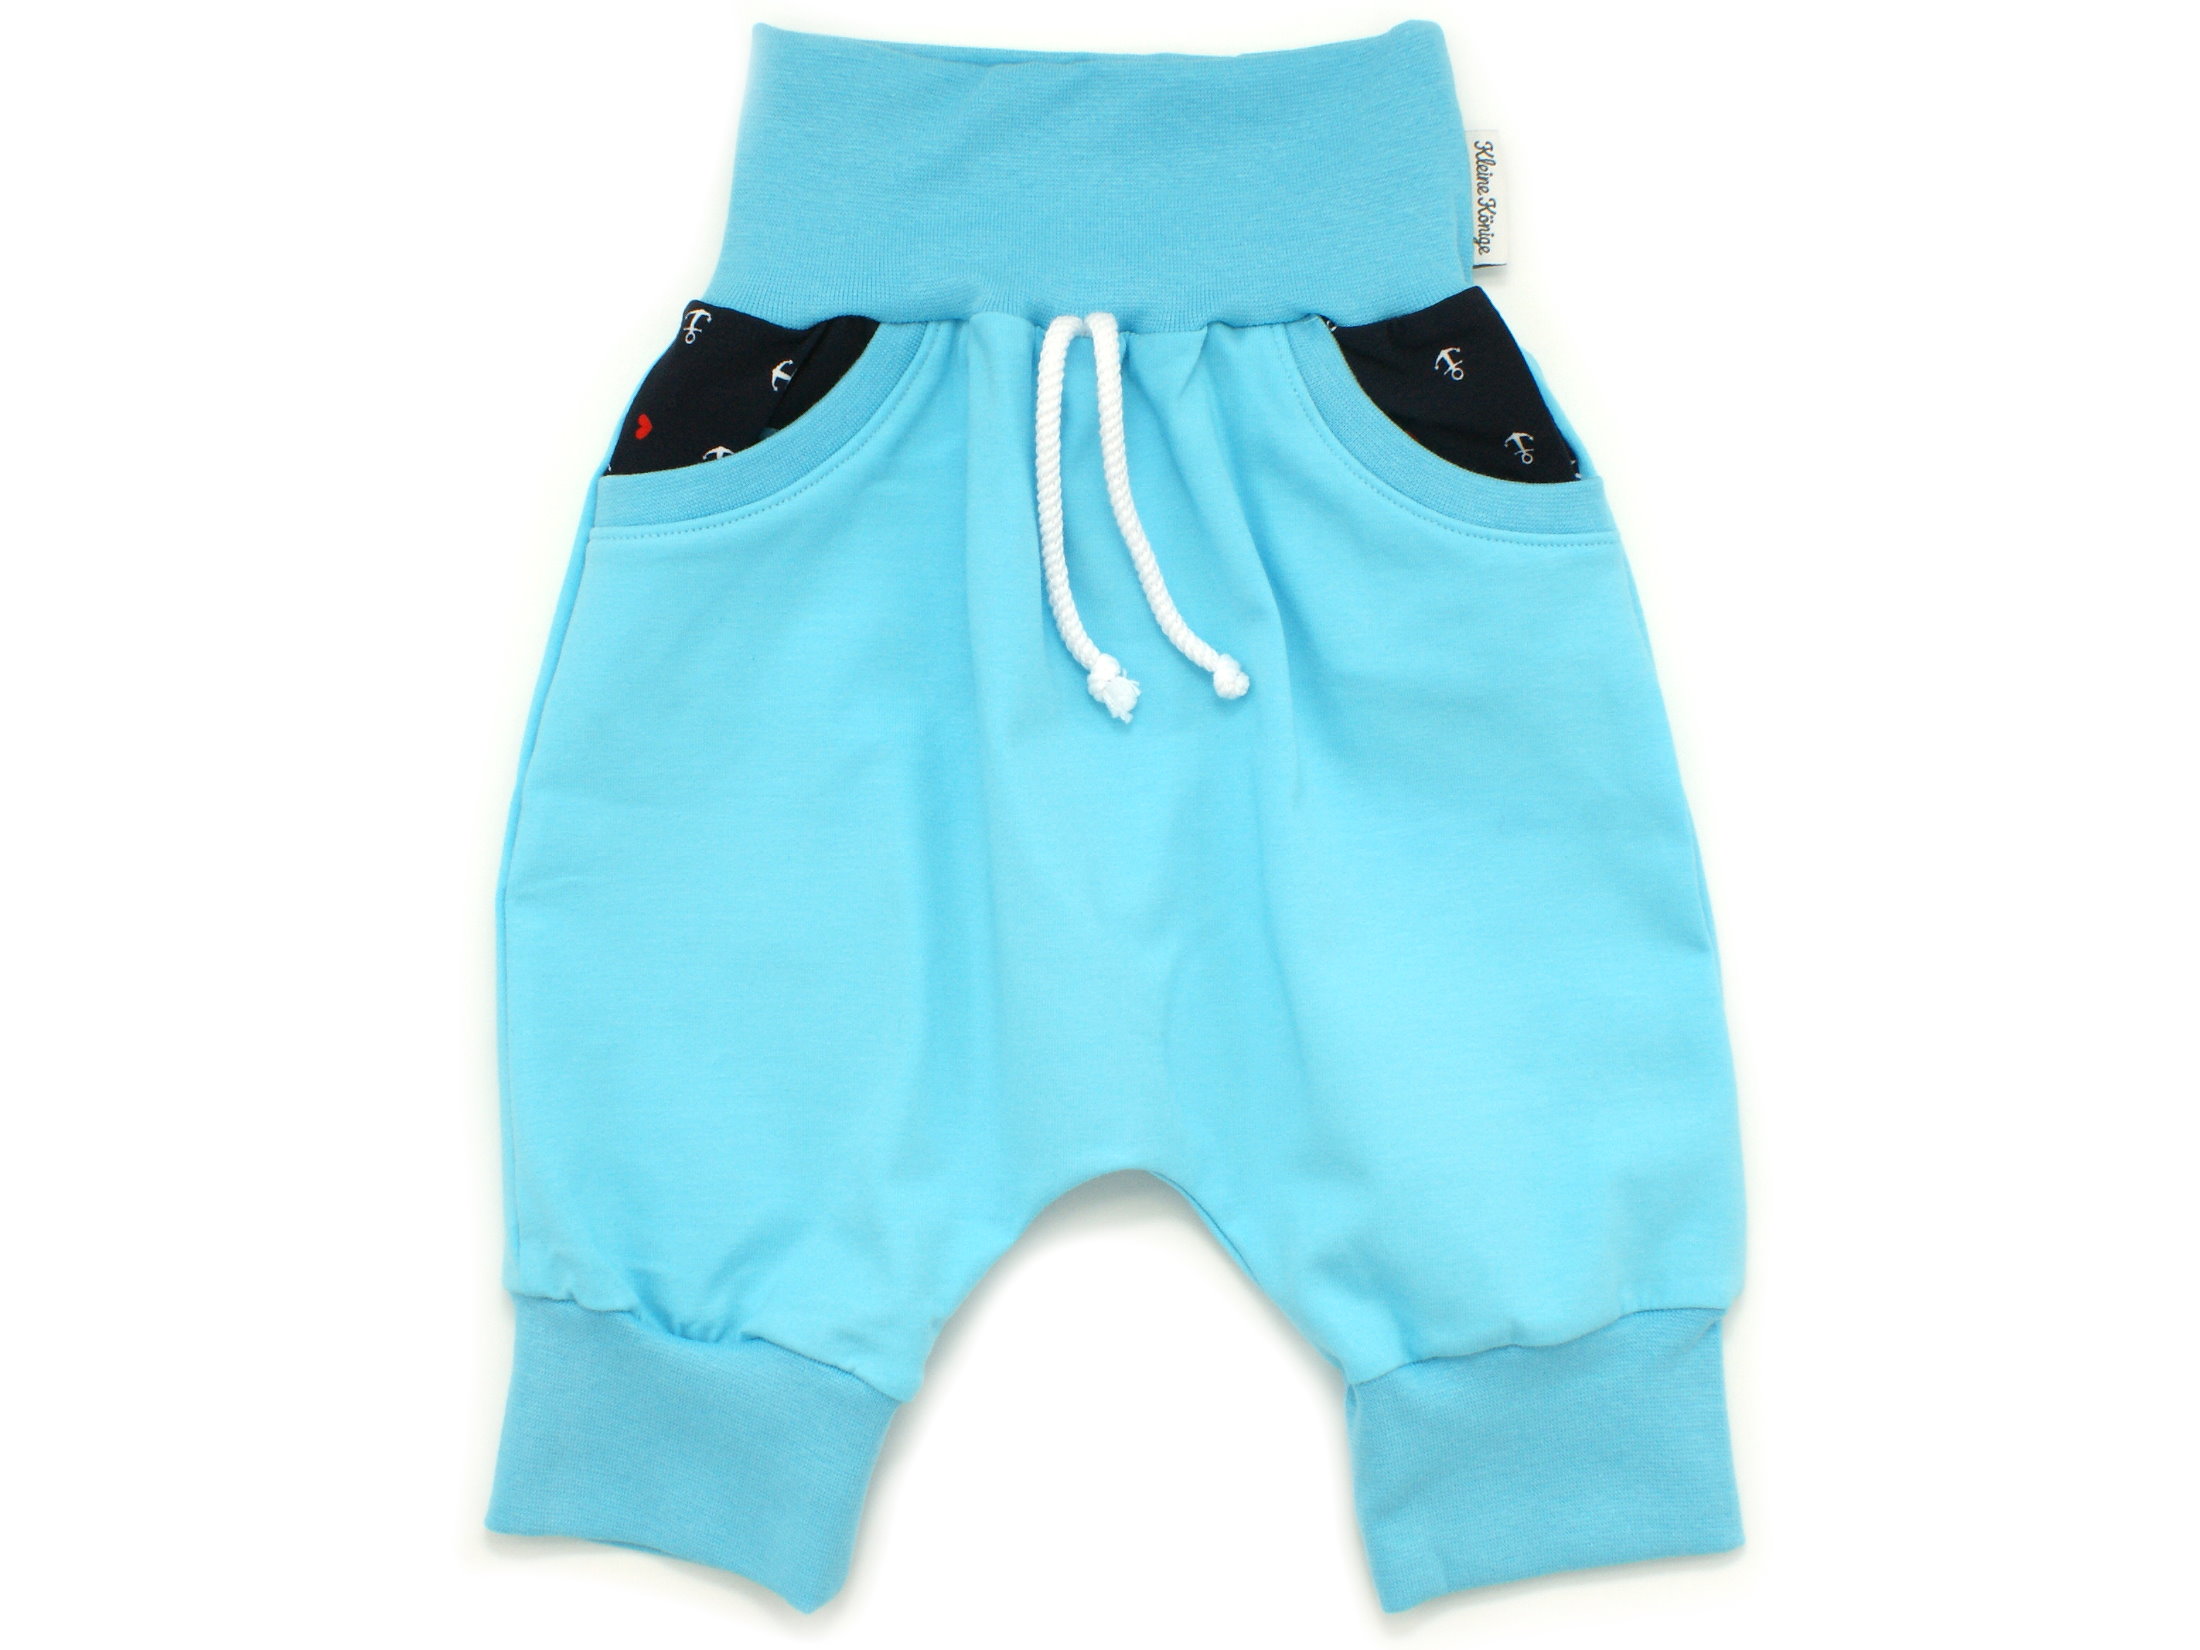 Kinder Bermuda-Shorts Anker "Segelliebe" marineblau türkis